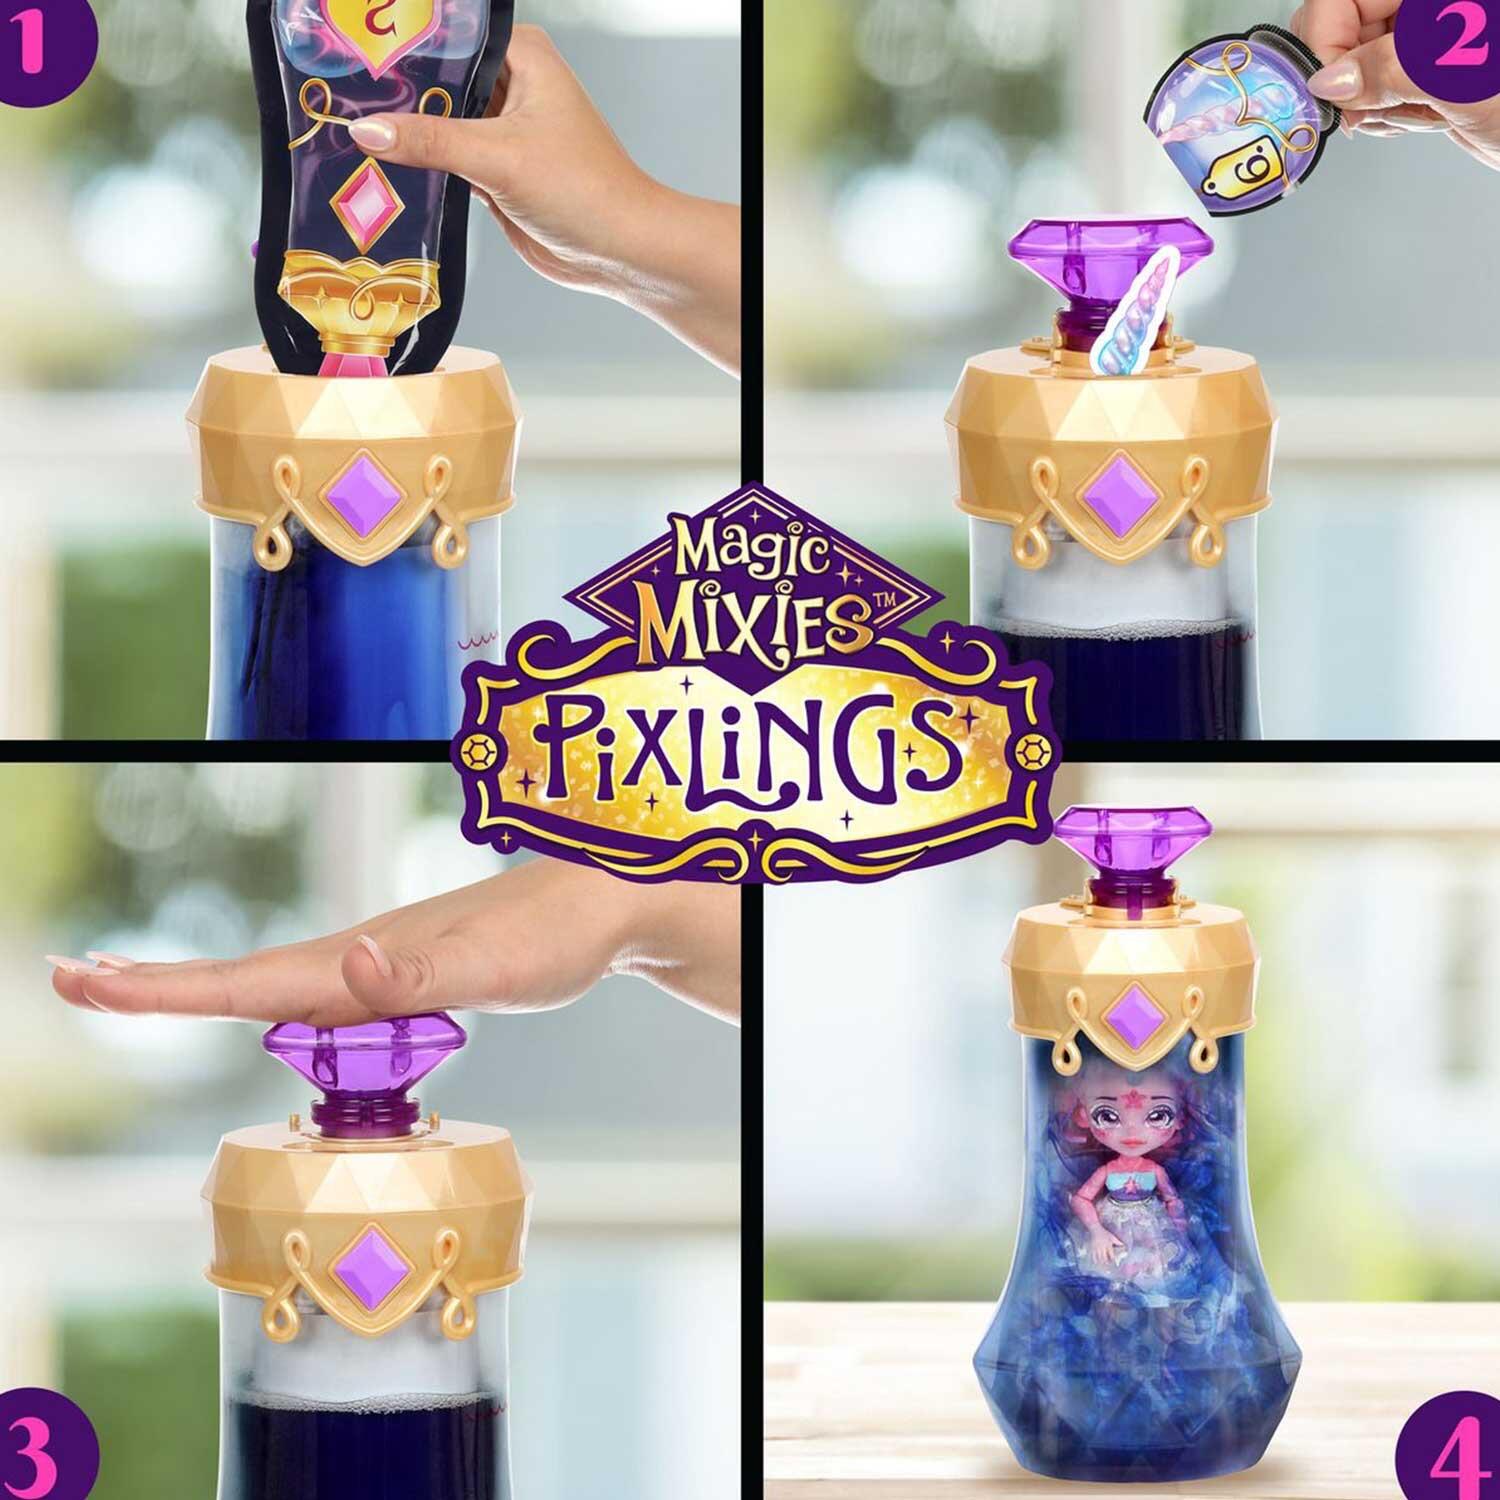 Magic Mixies Pixlings - Purple